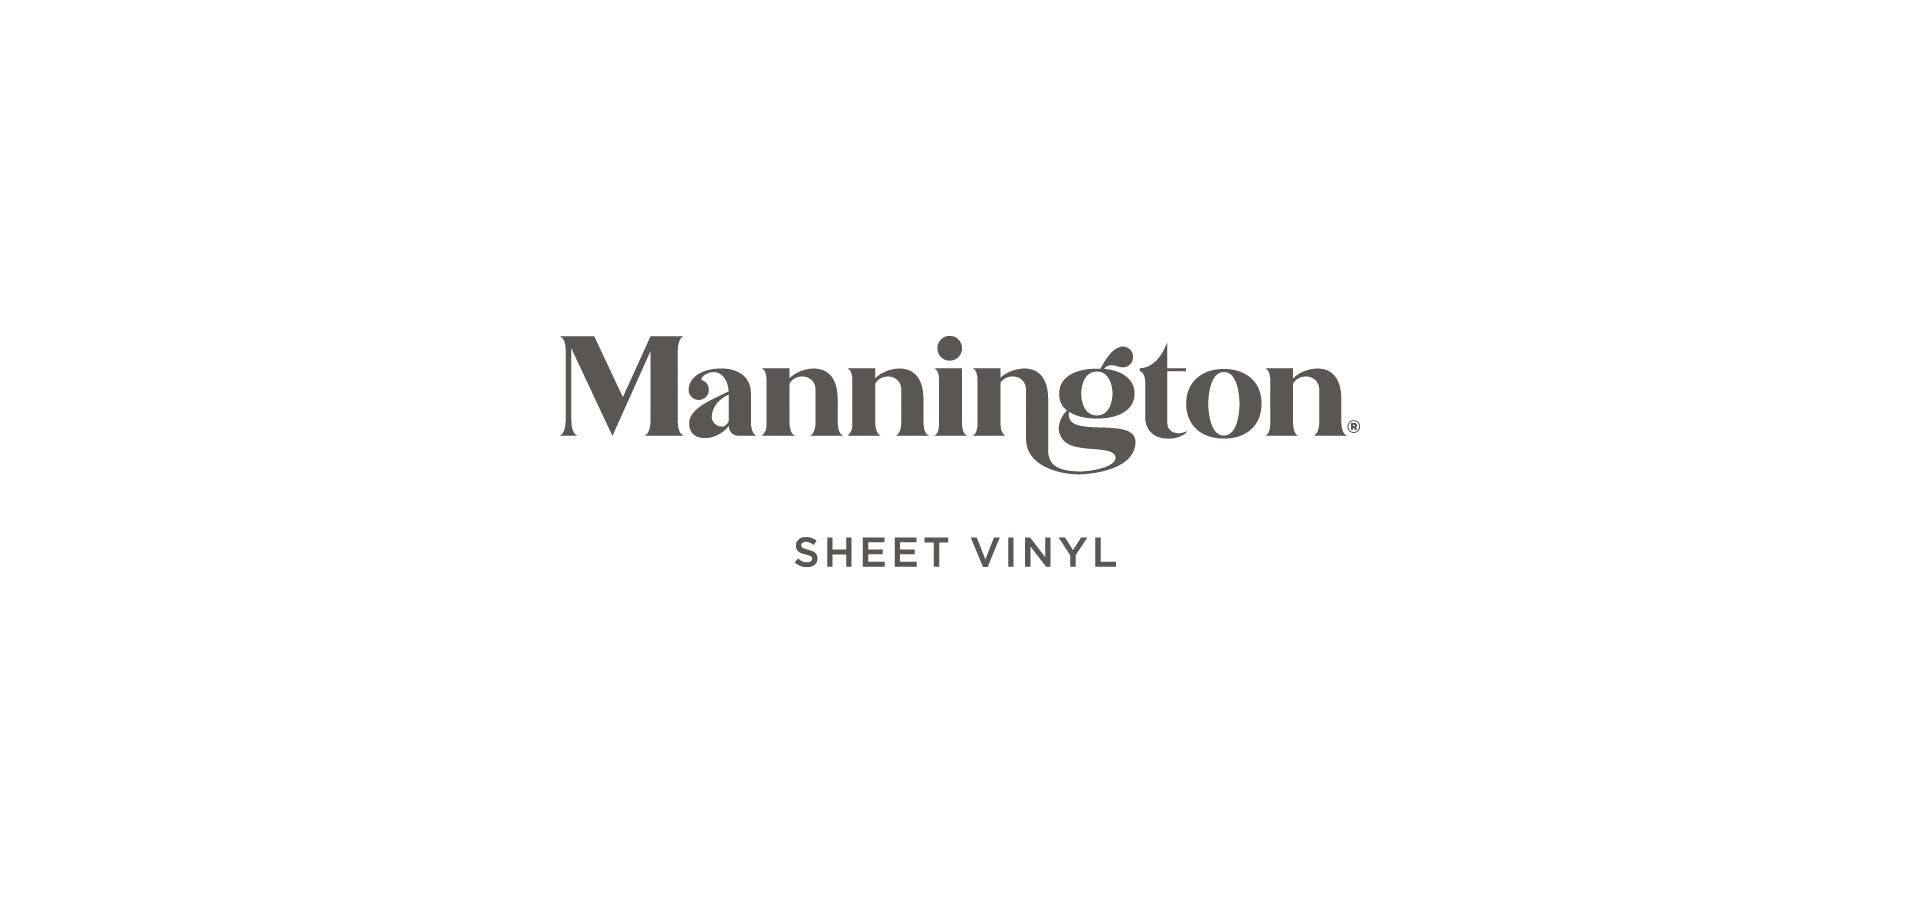 Mannington Sheet Vinyl logo